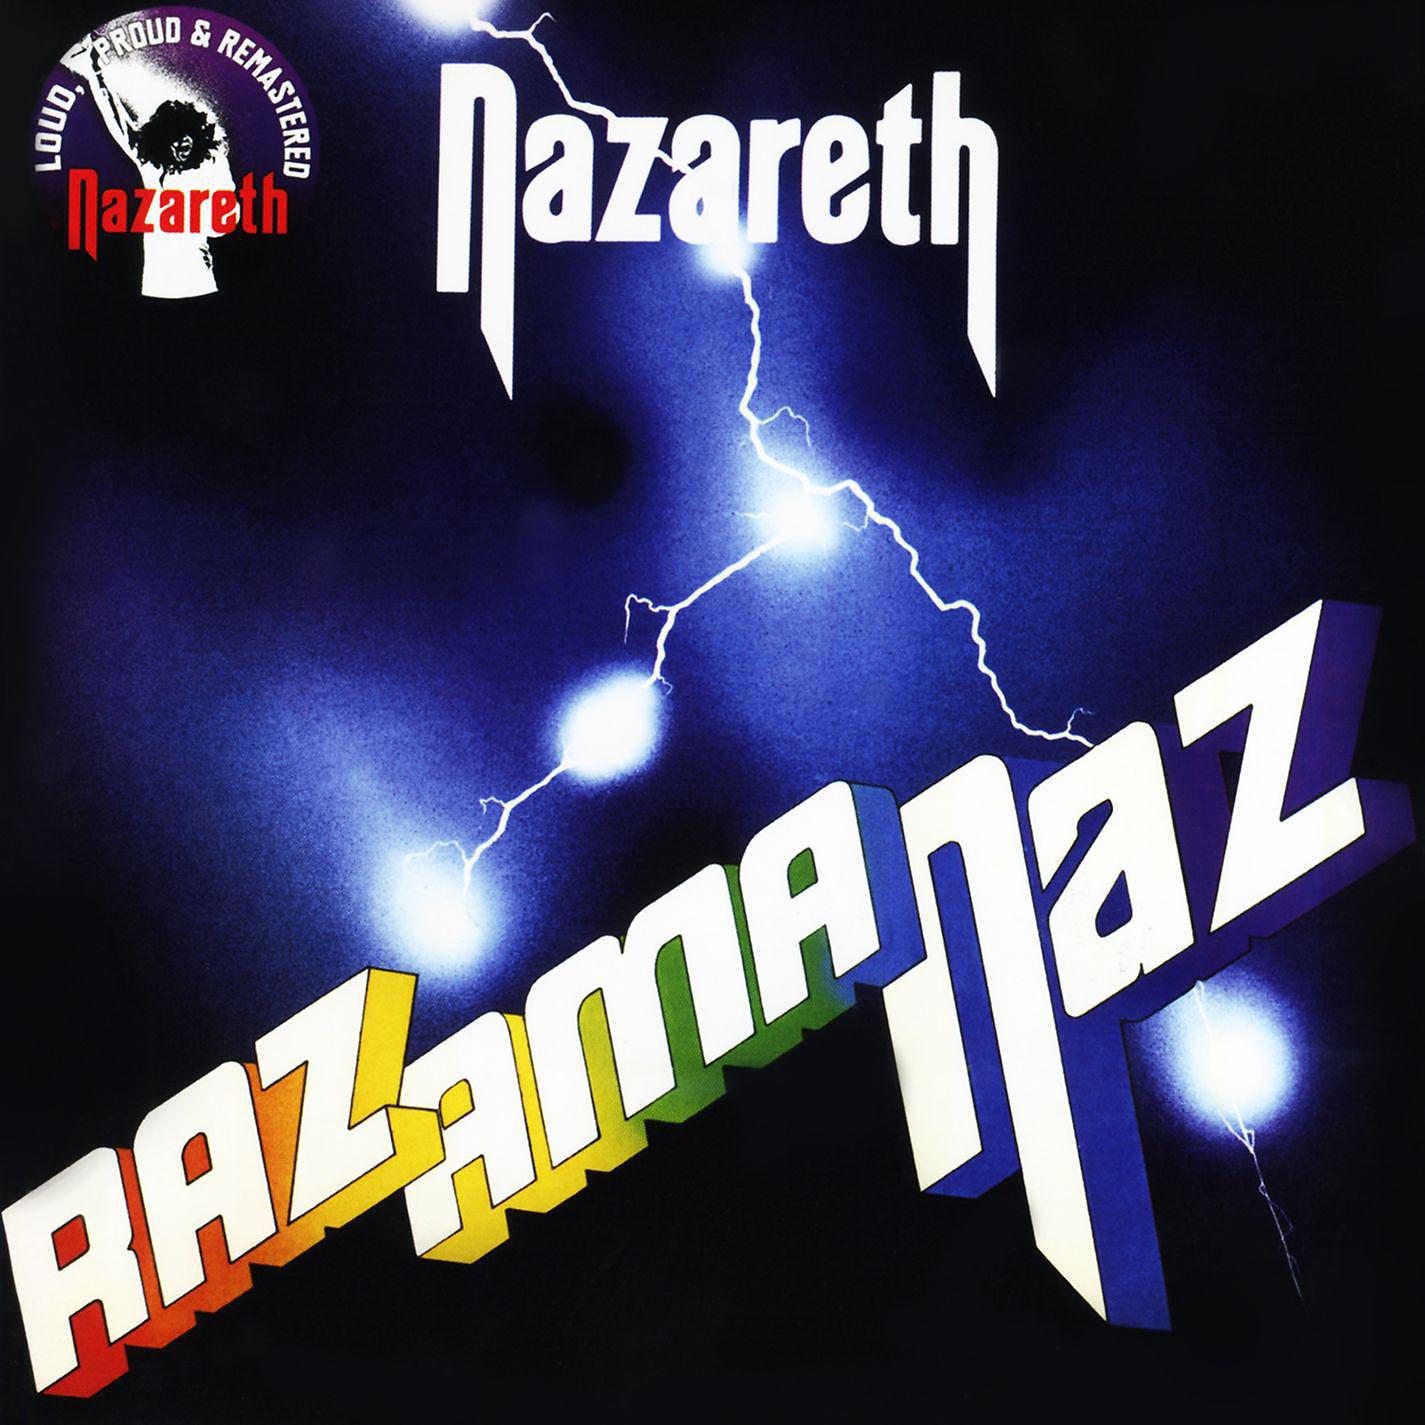 Nazareth nazareth треки. Мини винил Nazareth. Nazareth обложки альбомов. Nazareth обложки дисков. Nazareth дискография альбомы.